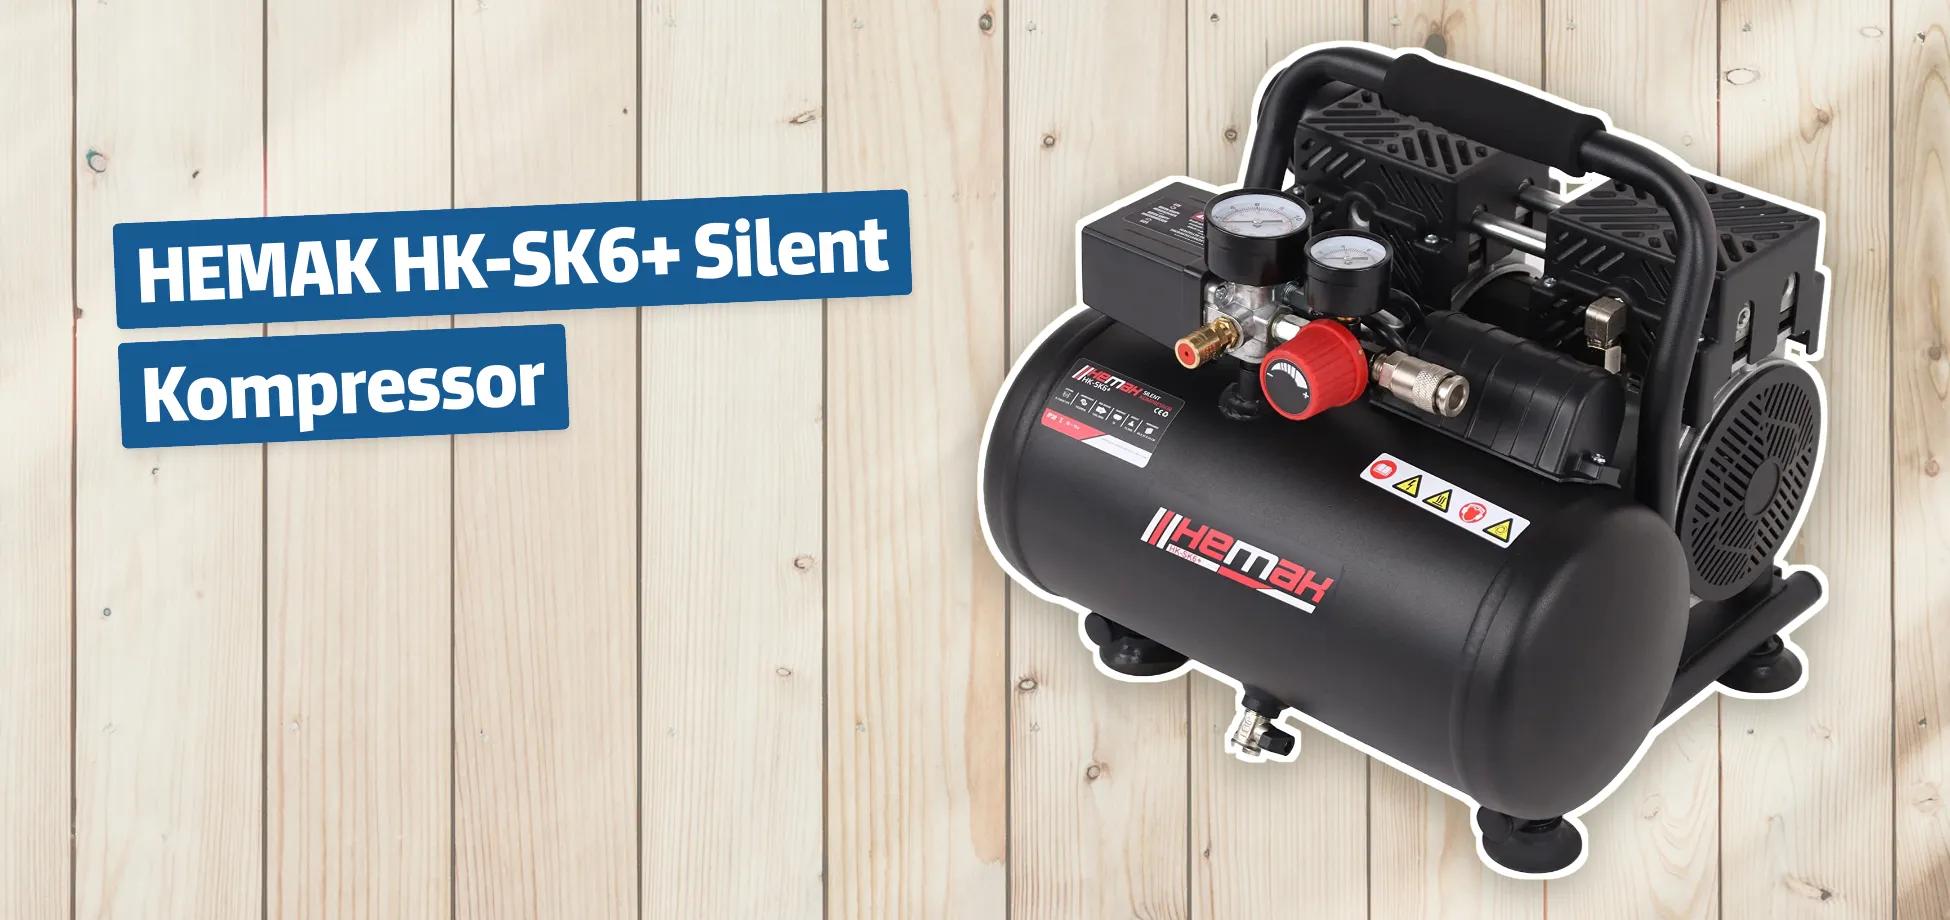 HEMAK HK-SK6+ Silent Kompressor